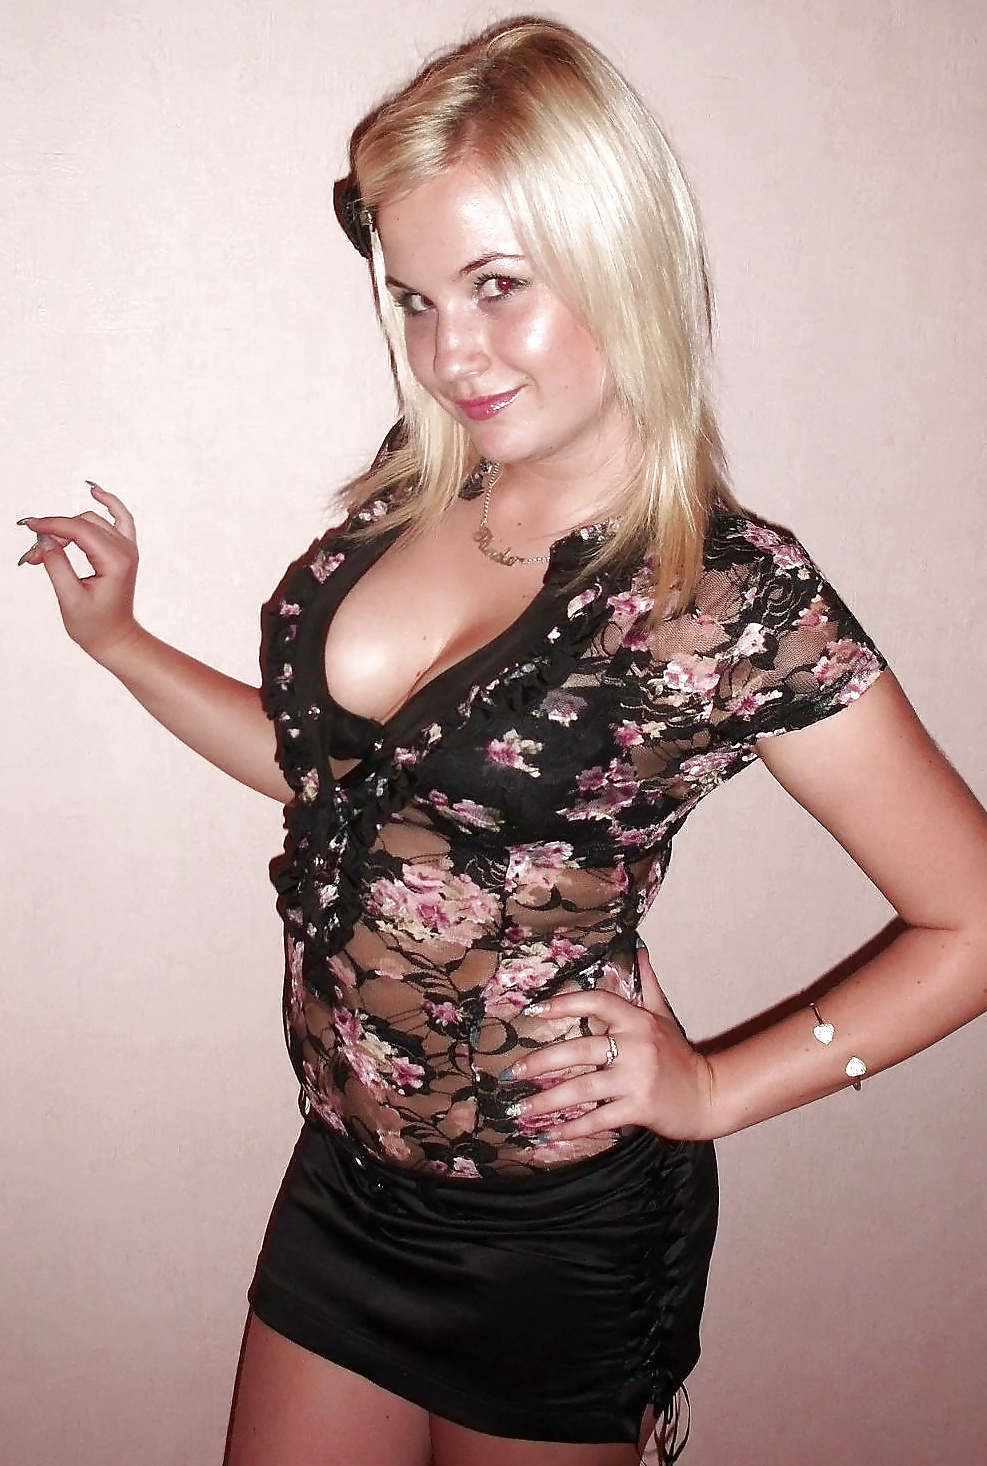 Amateur Blonde Teen Posing 2. porn pictures